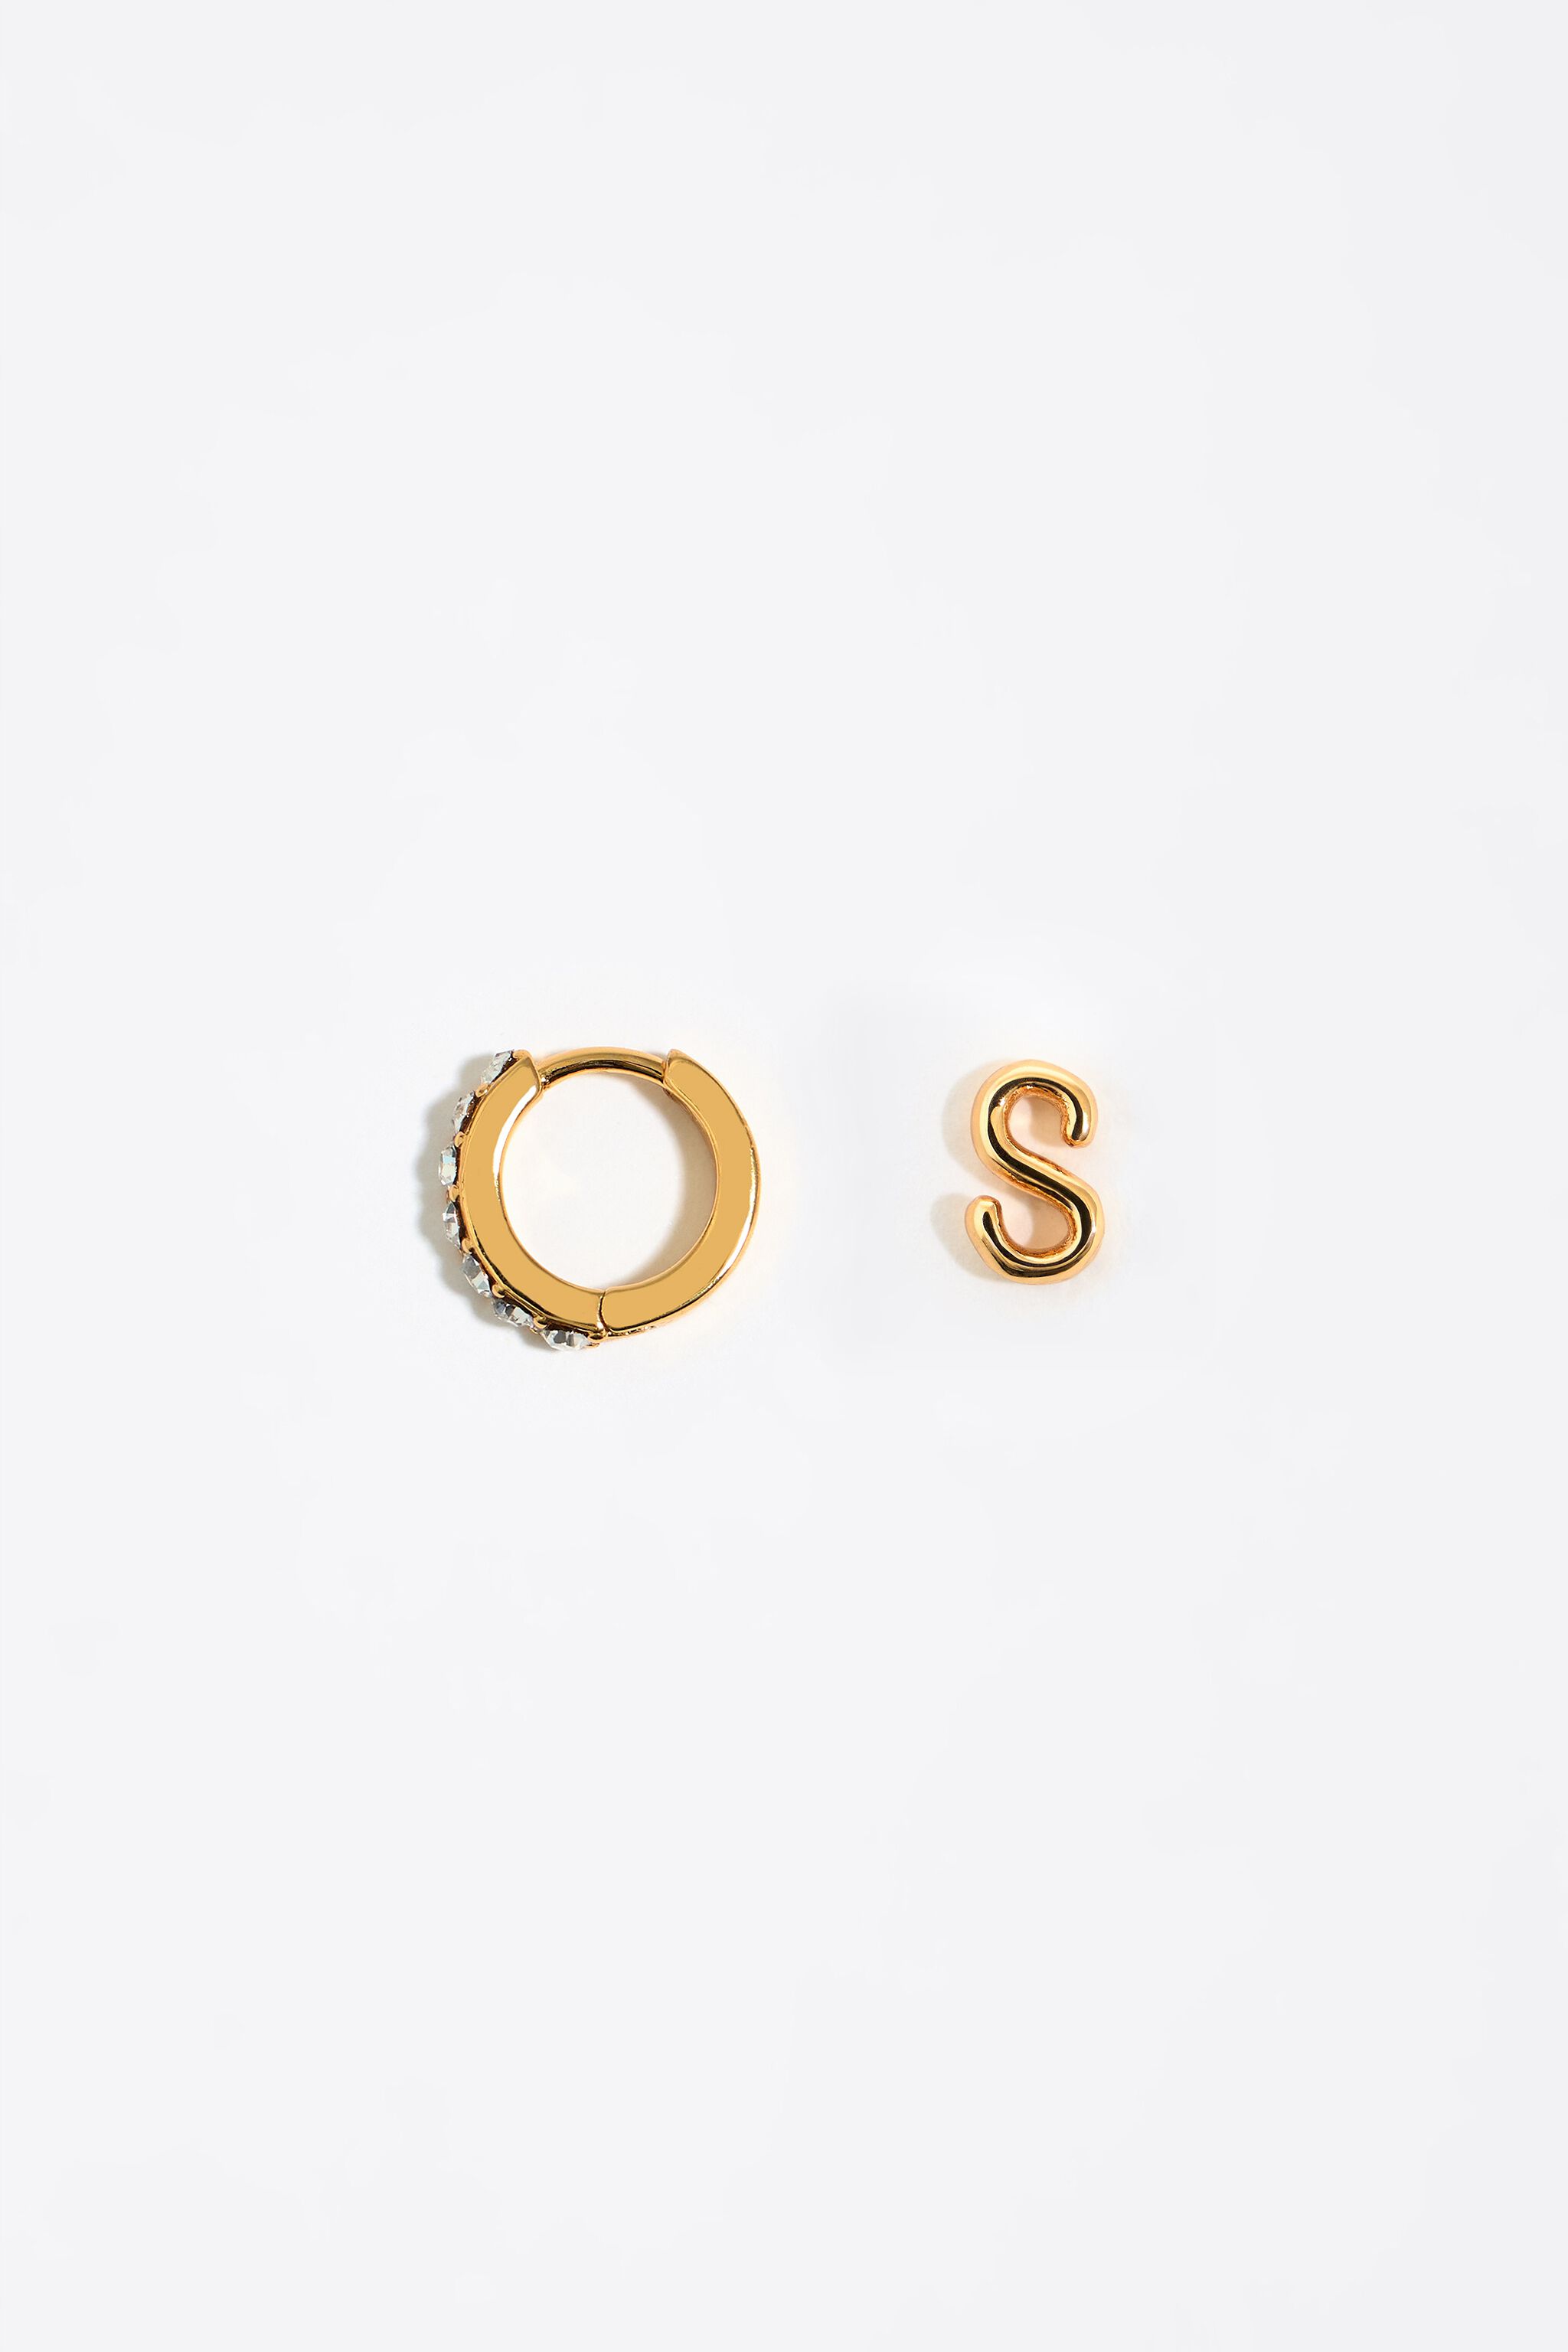 14k Real Yellow Gold Initial Letters Stud Earrings /Alphabetic Letters  Earrings / Diamond Cut Letters Earrings Push Back / Aretes Oro Real -  Walmart.com